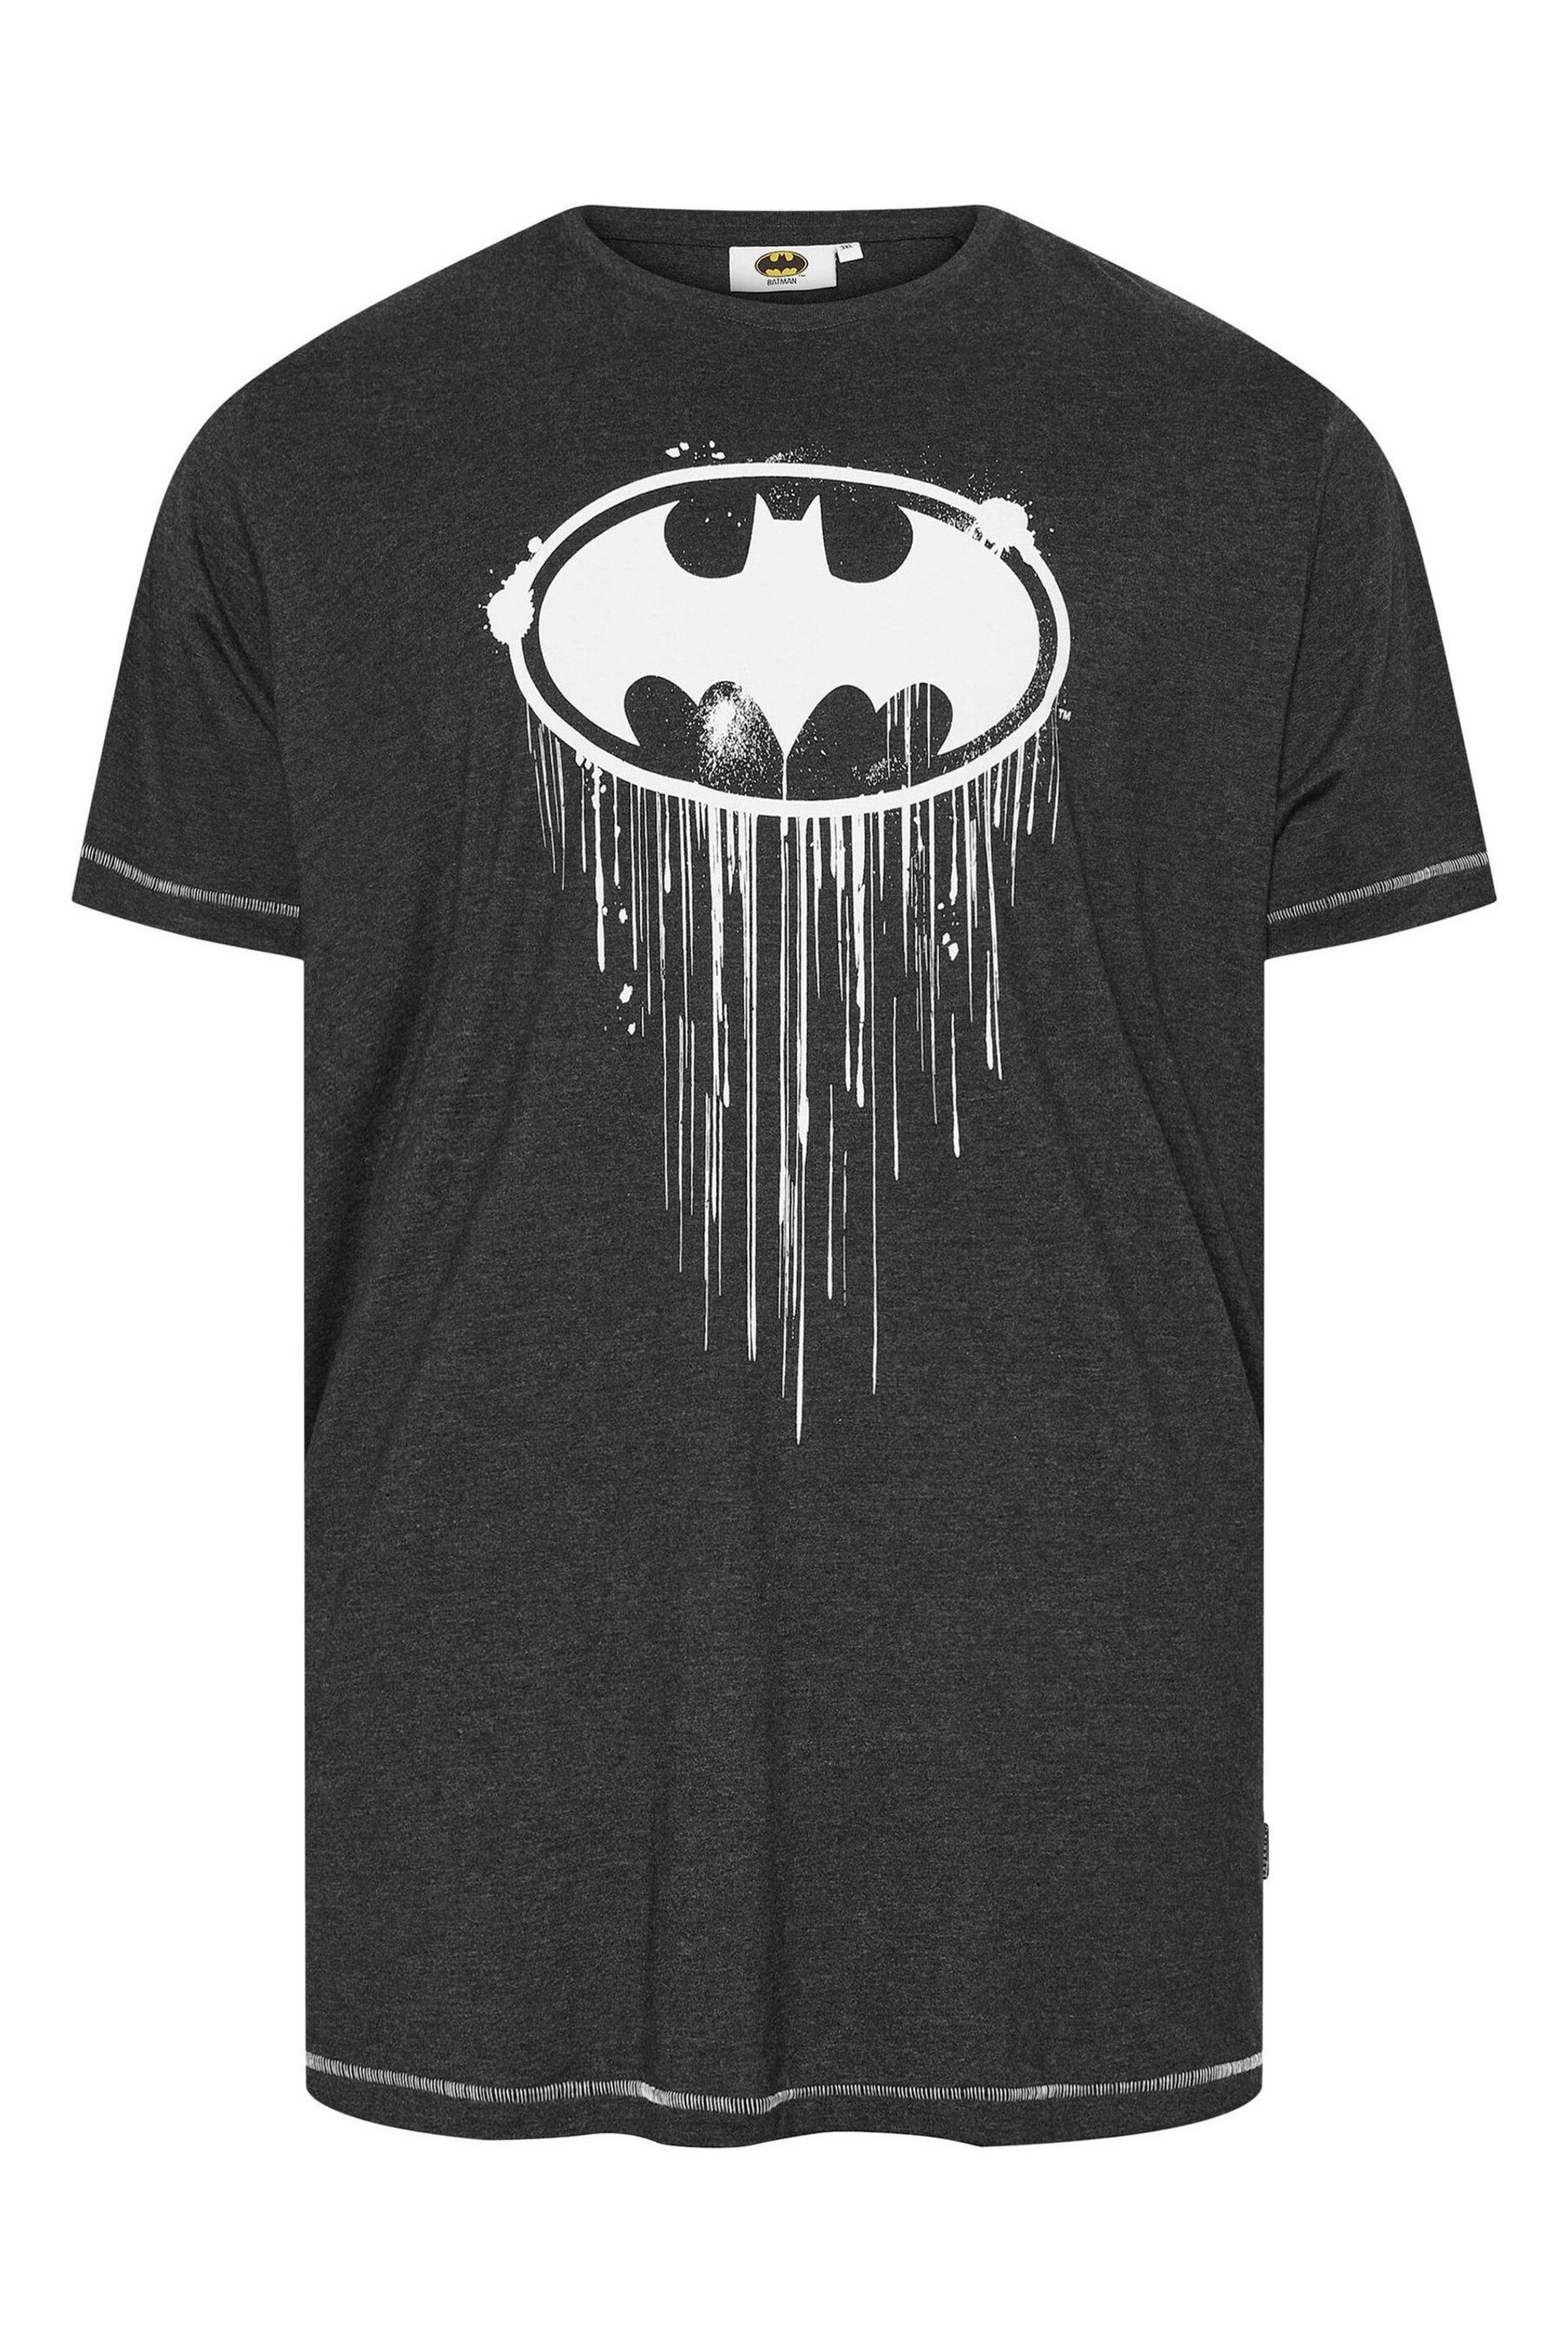 BadRhino Big & Tall Black Batman Graphic T-Shirt - Image 2 of 3